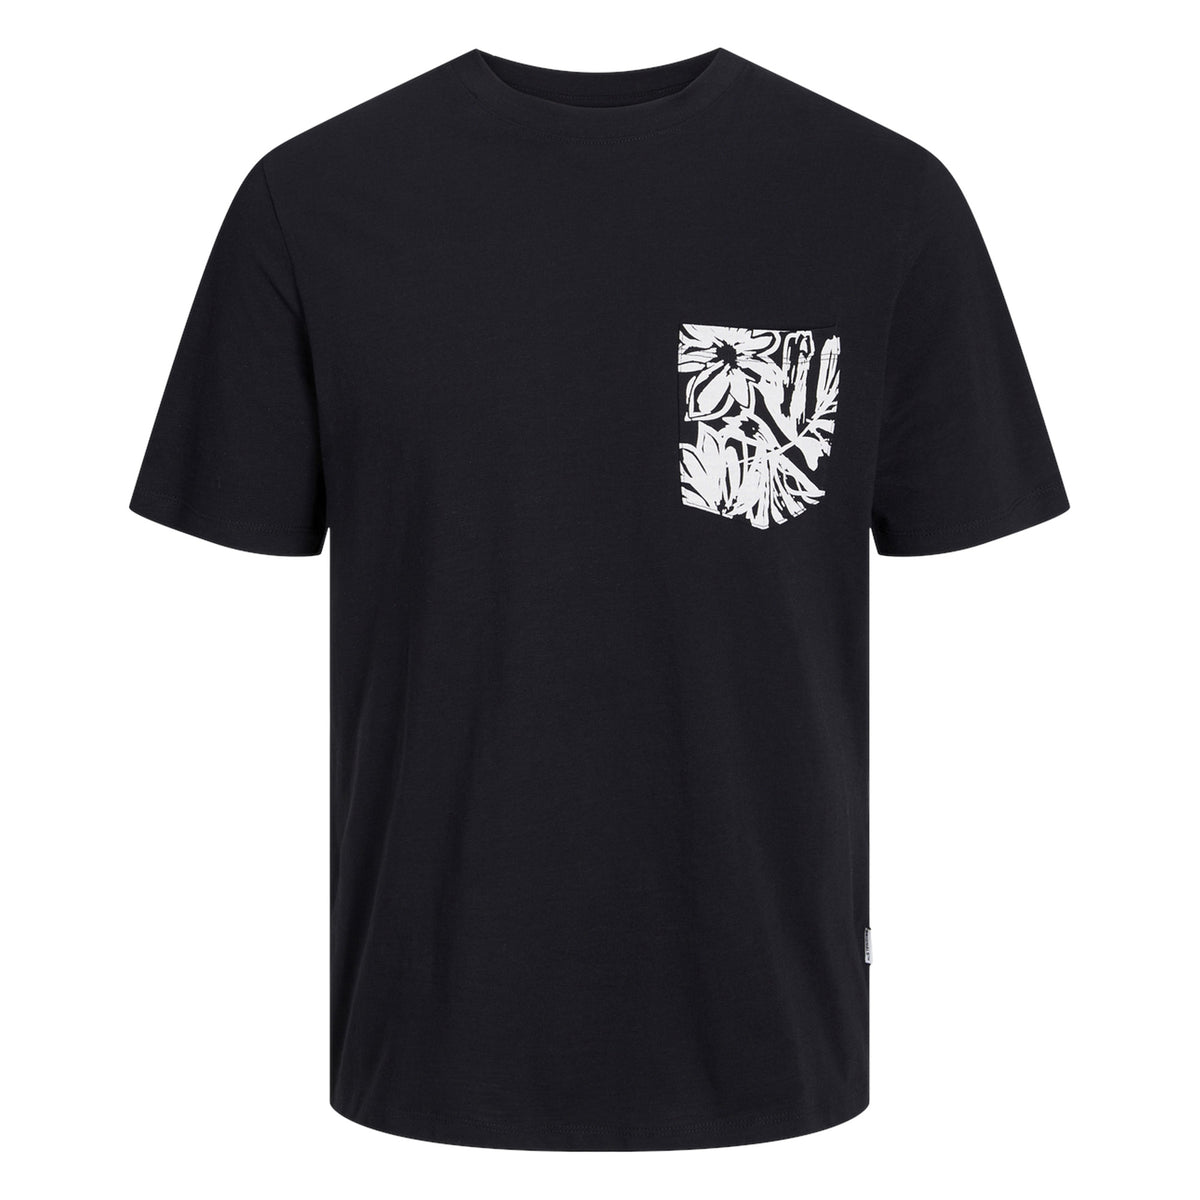 Starks Fishing Shop - Ehmanns fishing - fishing T-Shirts XL - Bedruckt